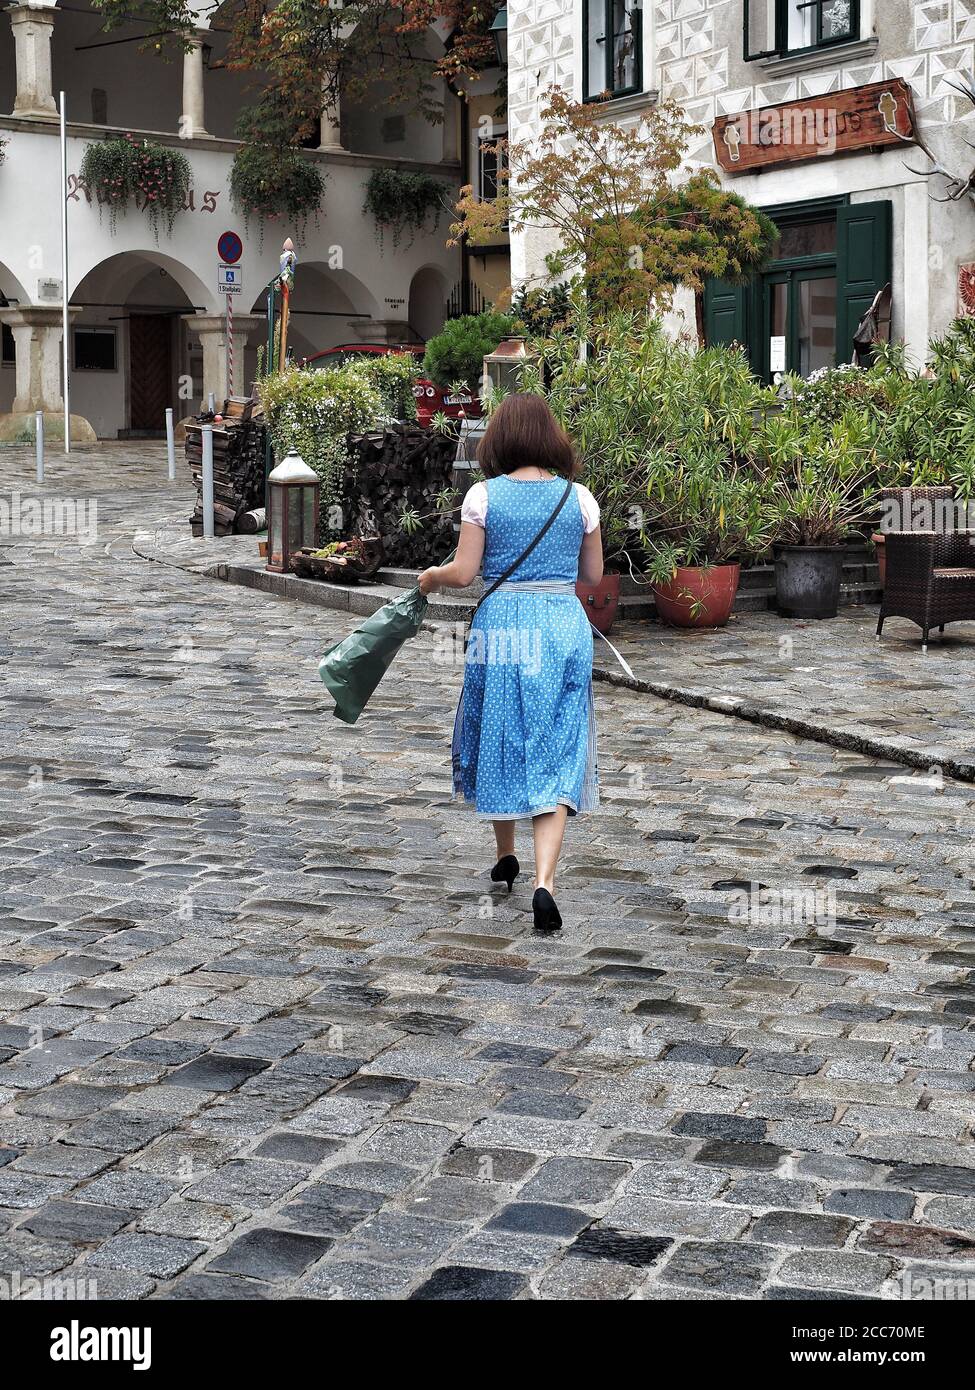 GUMPOLDSKIRCHEN, AUSTRIA - 09/01/2018. Caucasian woman in typical blue austrian costume walking on the street. Stock Photo